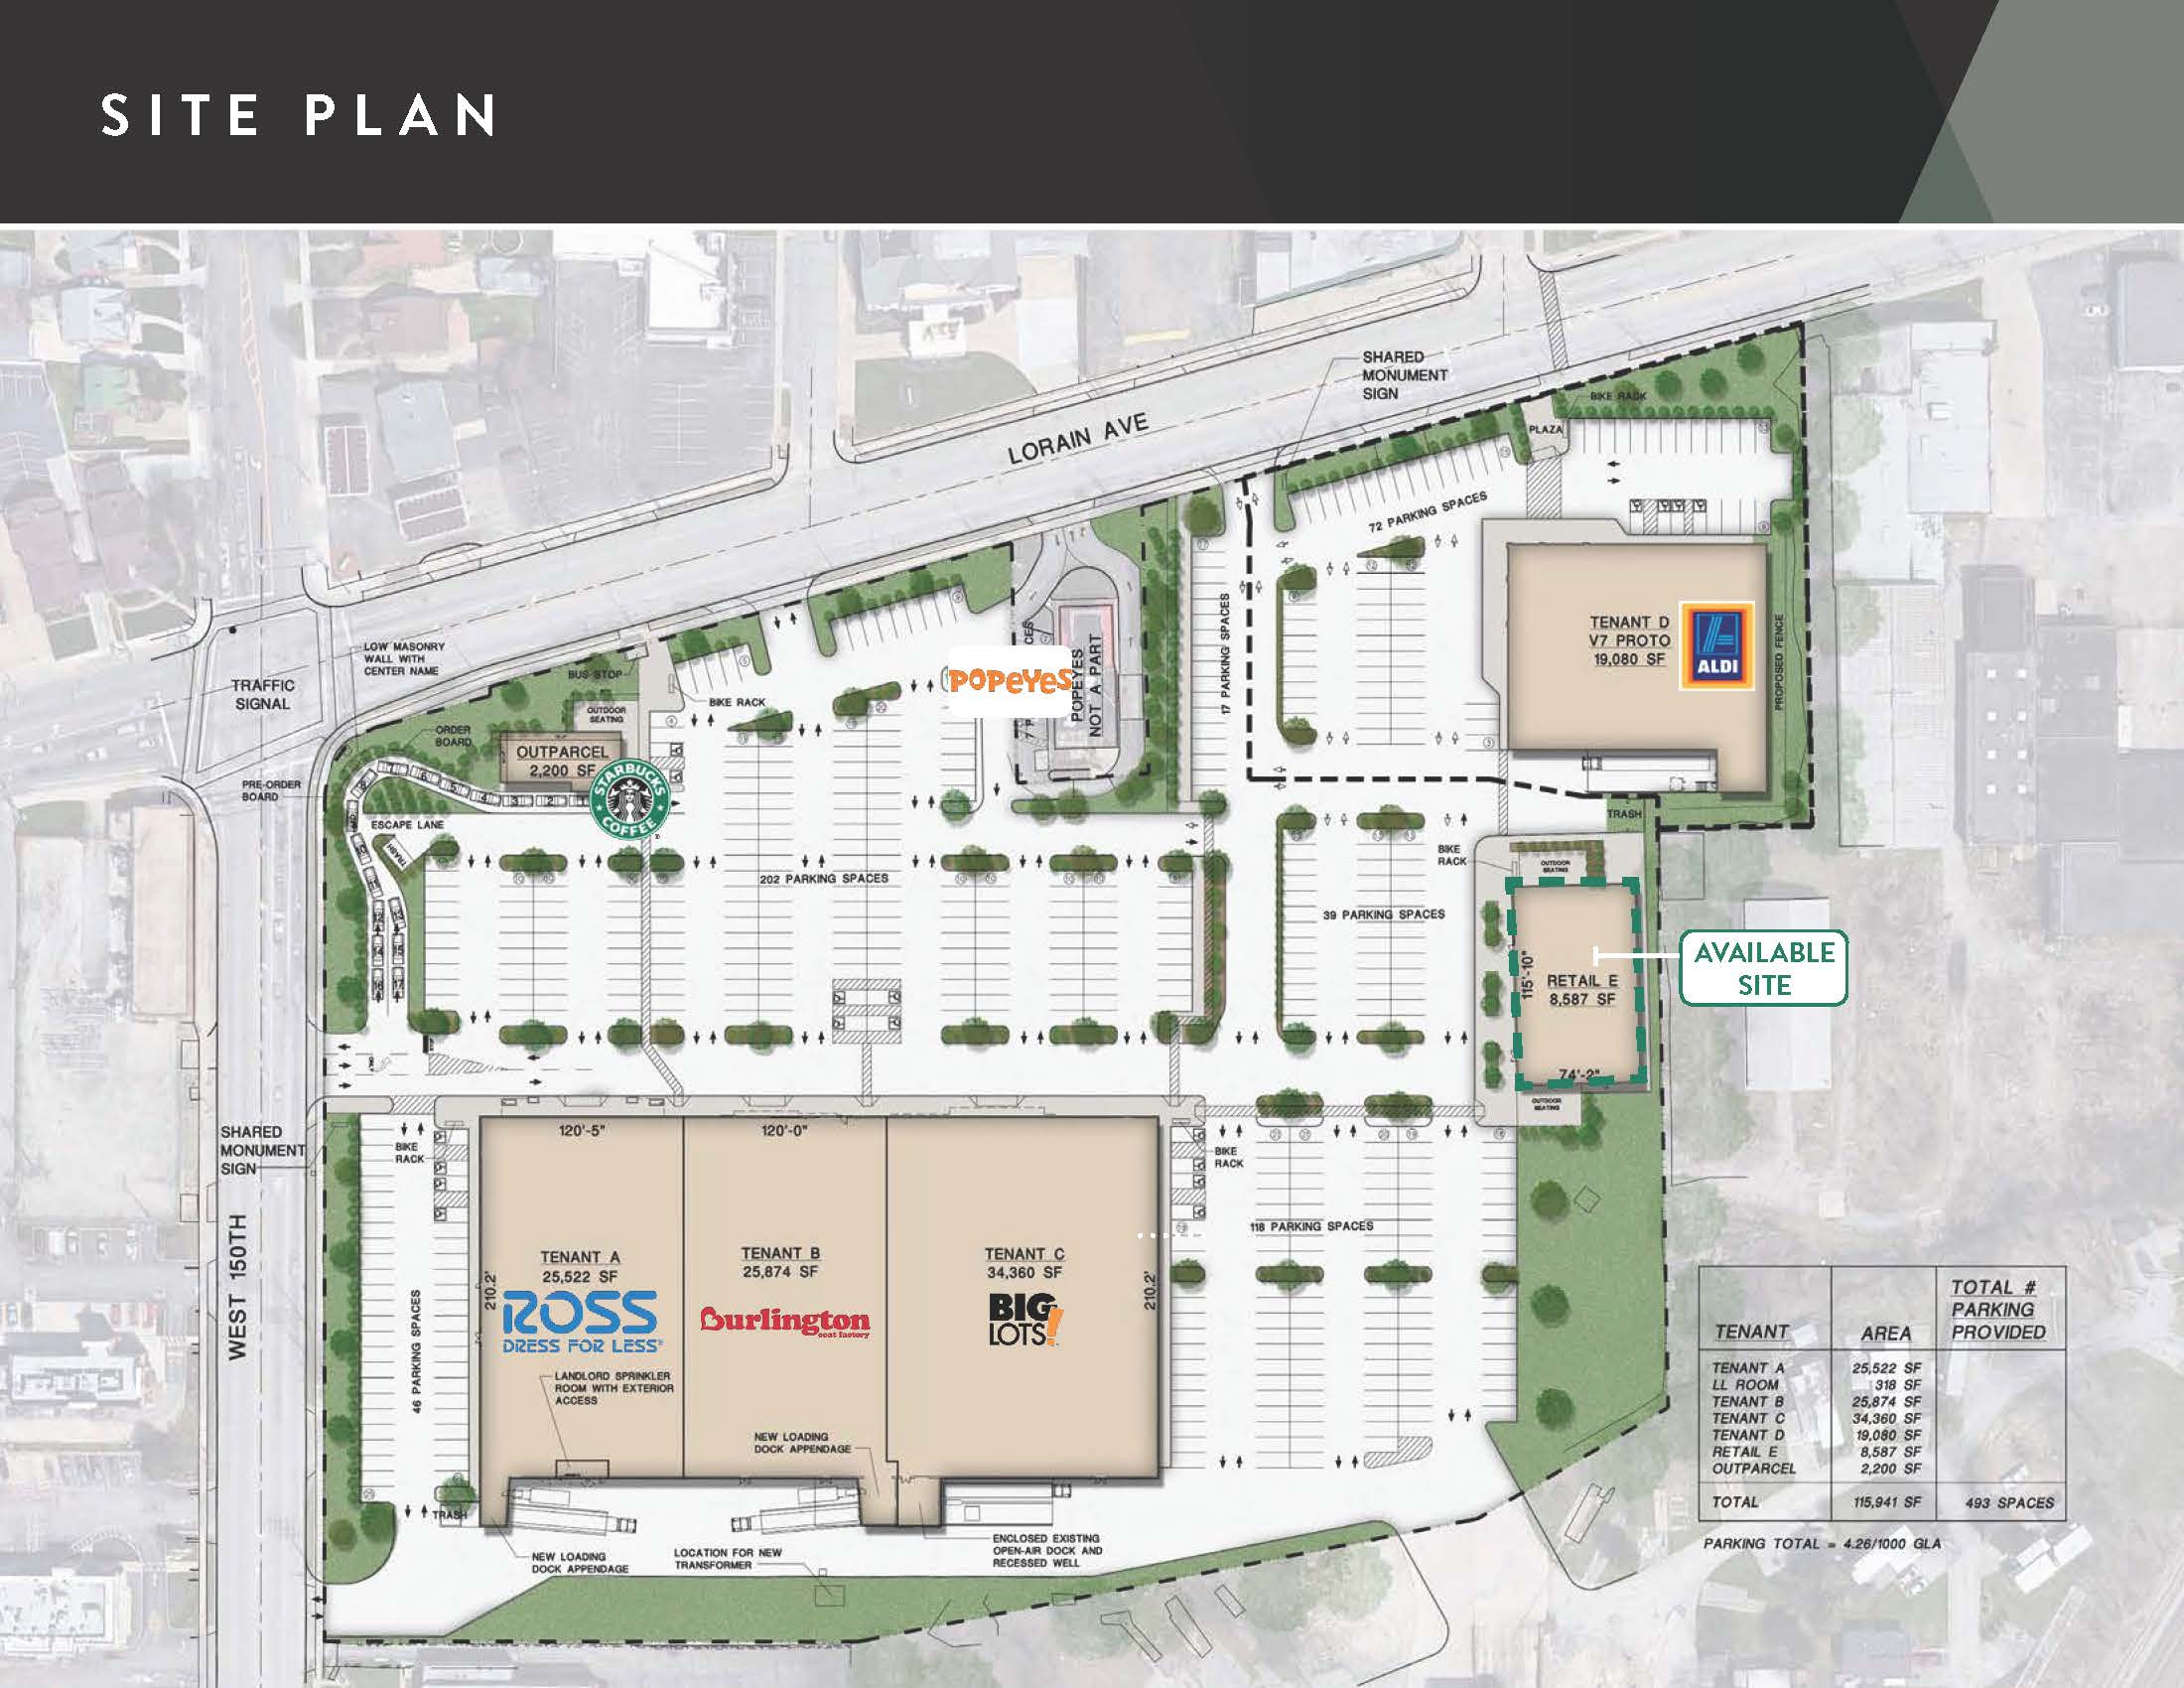 Kmart Site Redevelopment - West Park Kamm's Neighborhood Development